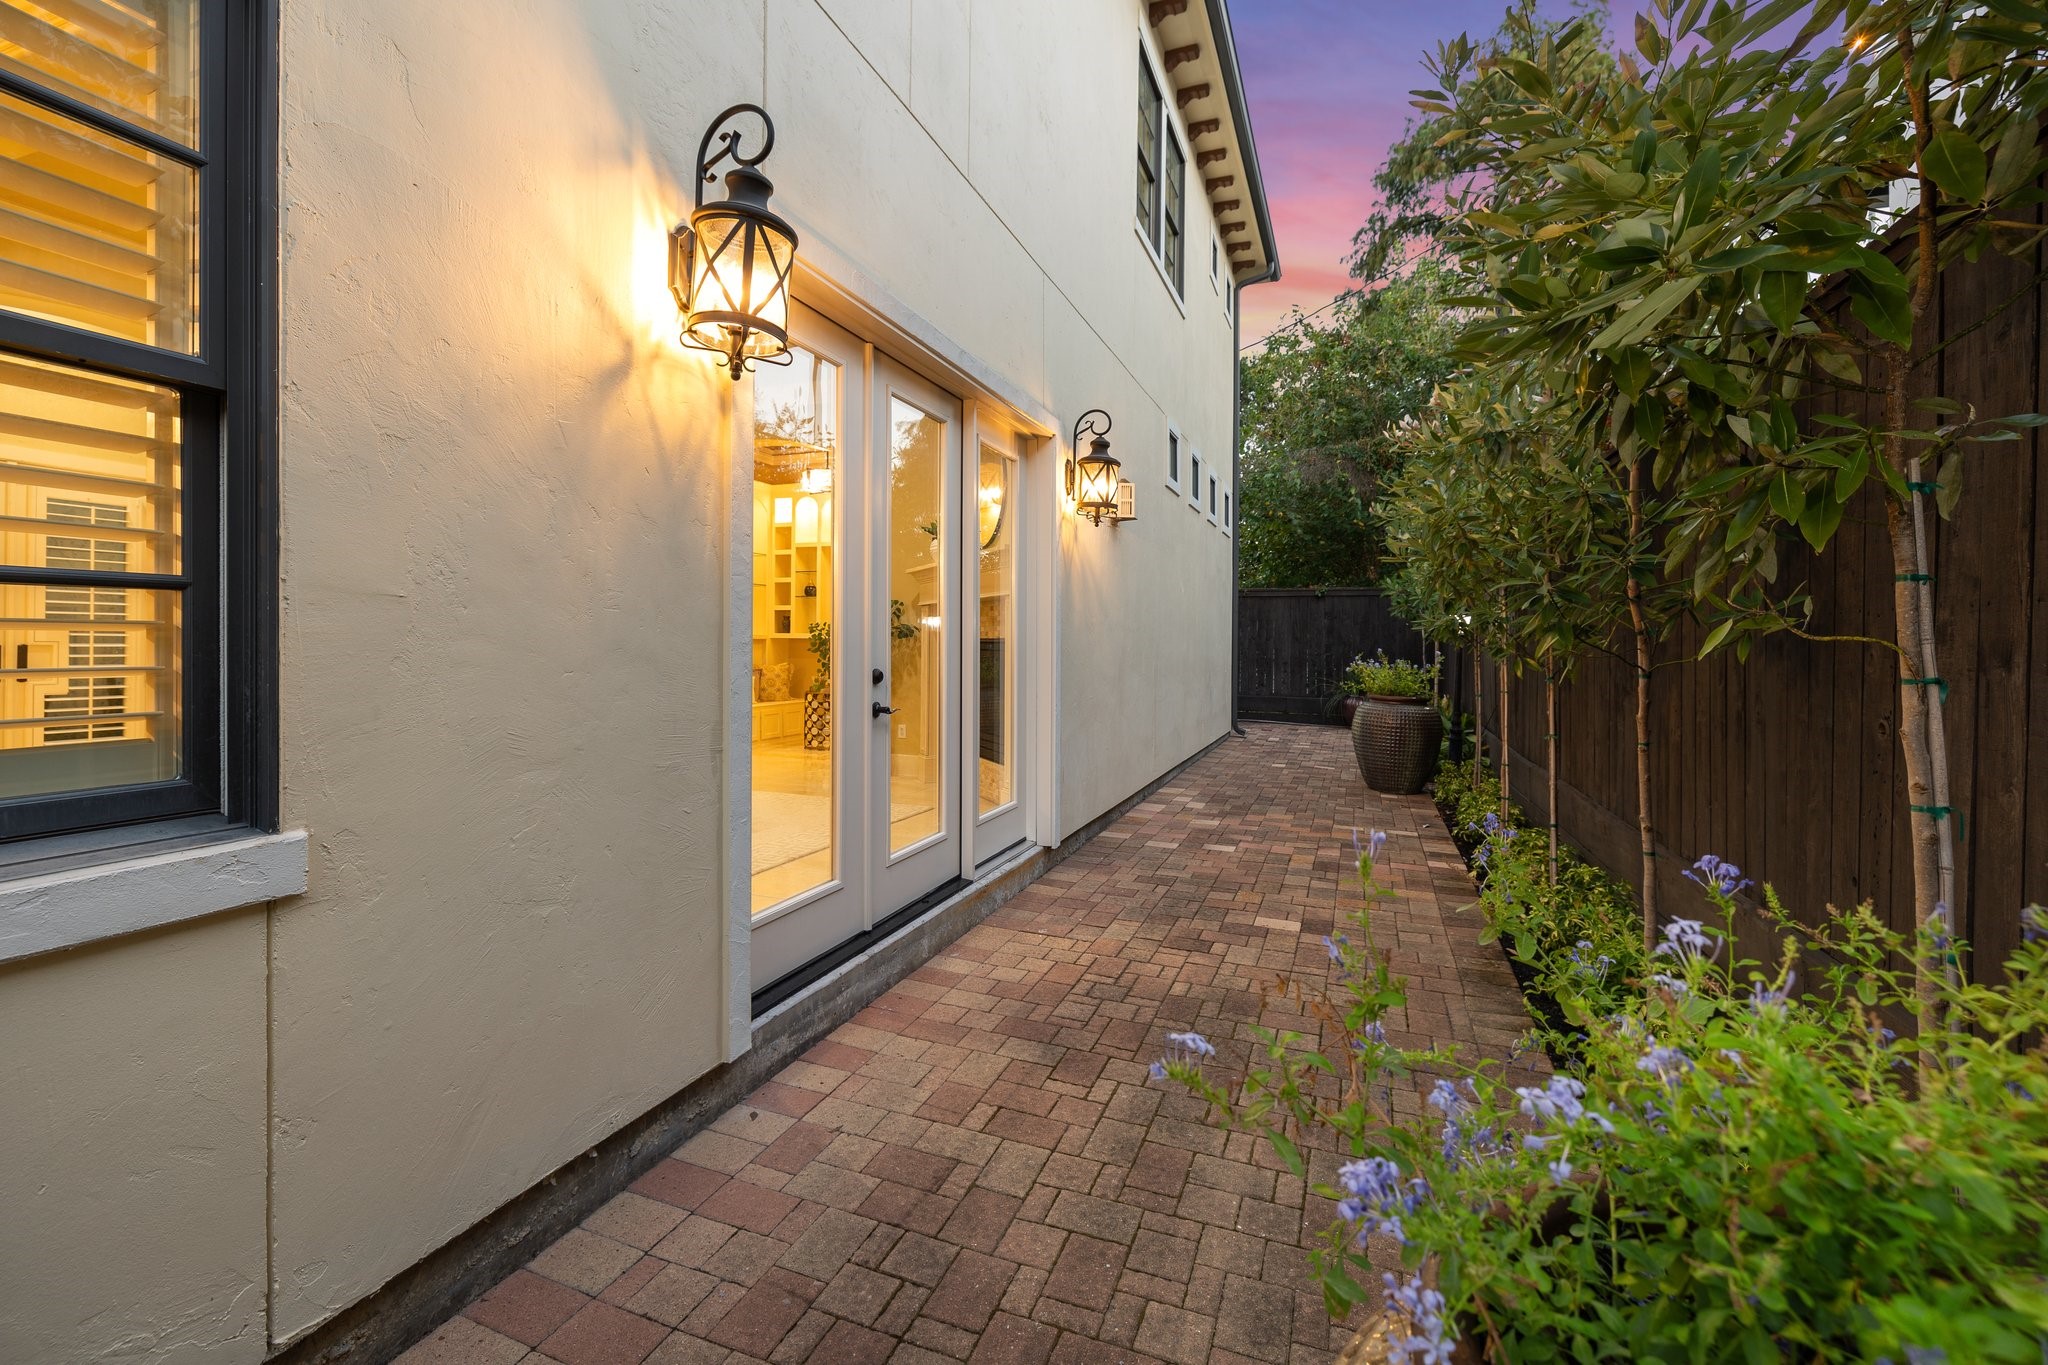 Custom outdoor lighting and glass doors to main living area.